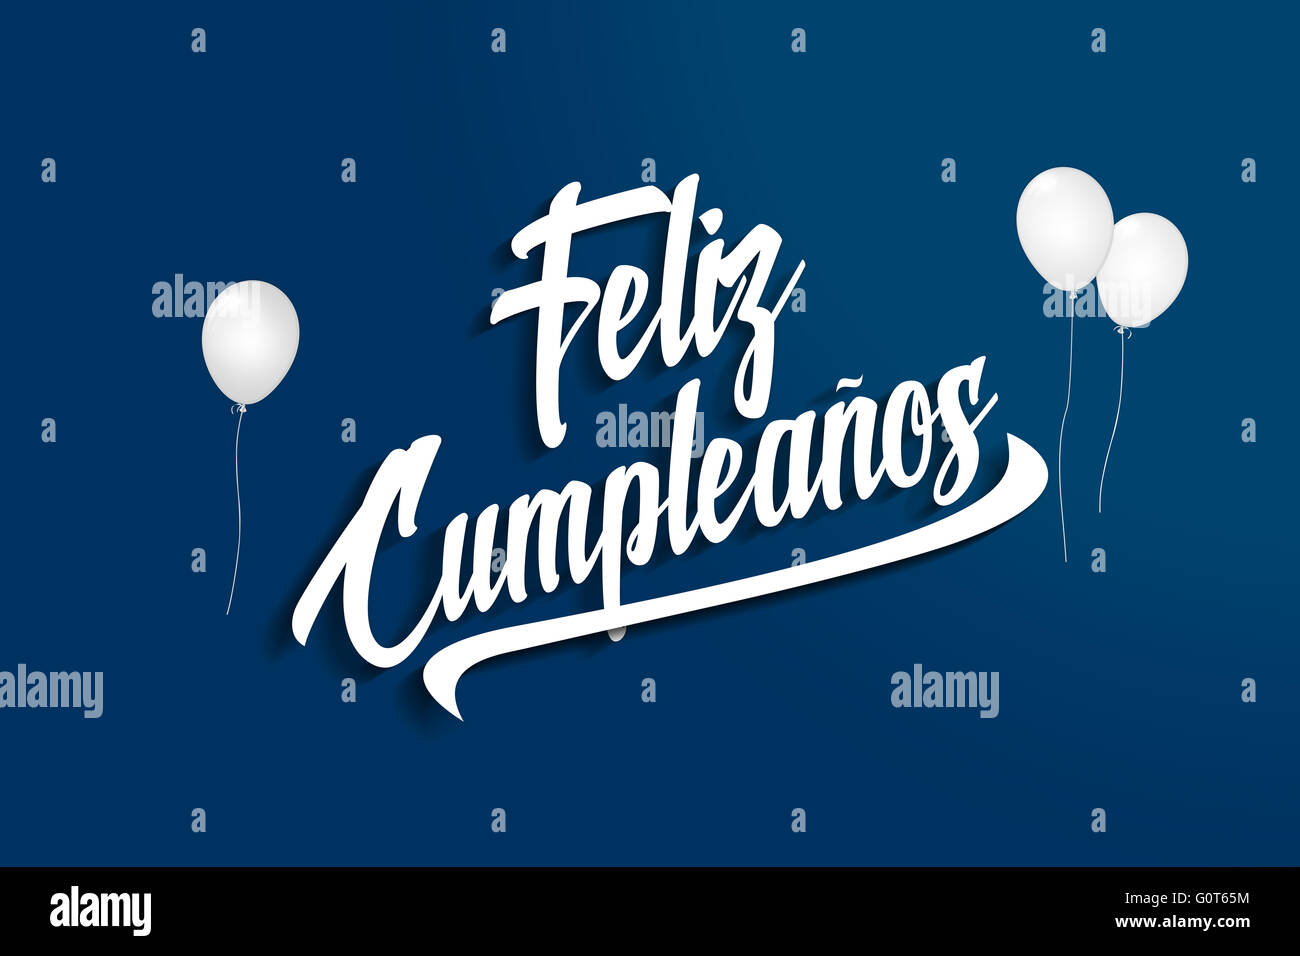 Feliz Cumpleanos - Happy Birthday in Spanish - Balloons - Anniversary Greeting Postcard - Illustration Stock Photo